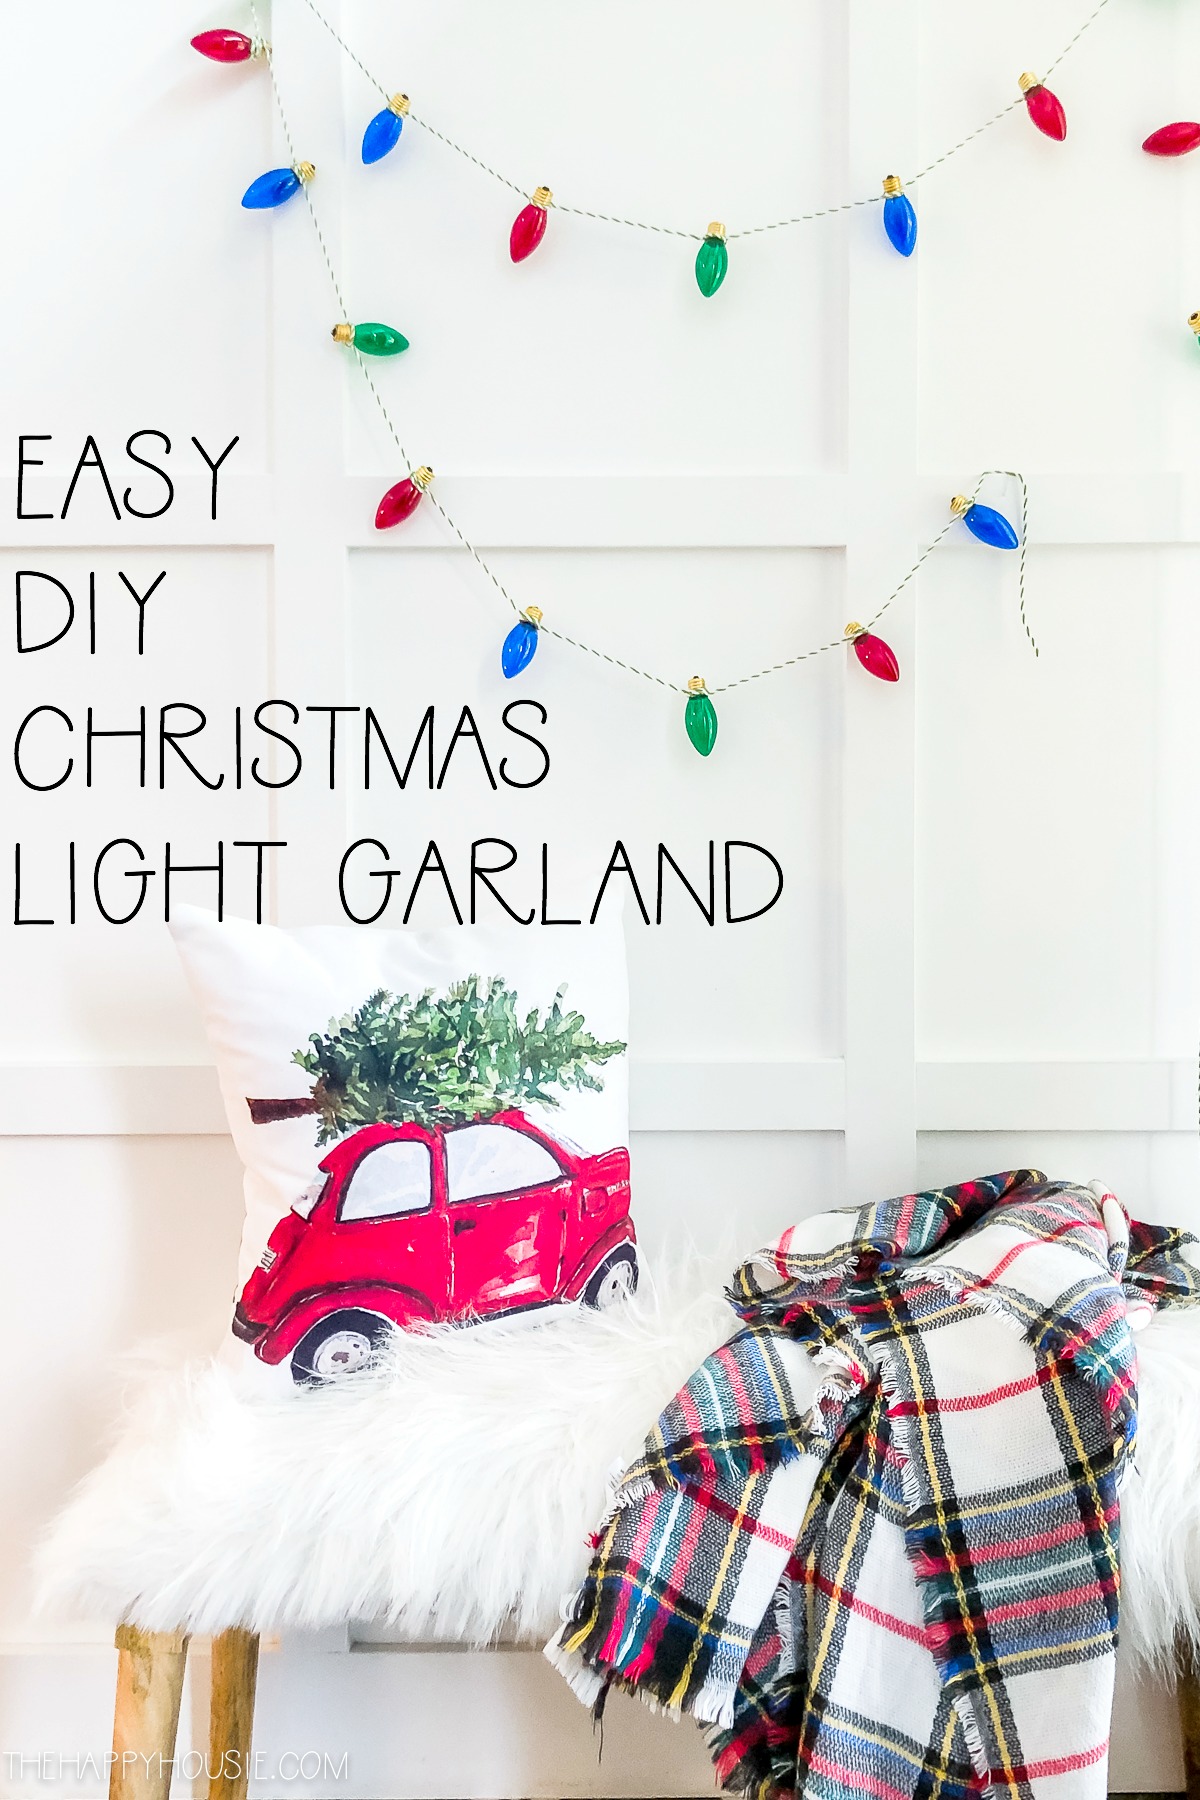 Easy DIY Christmas Light Garland poster.